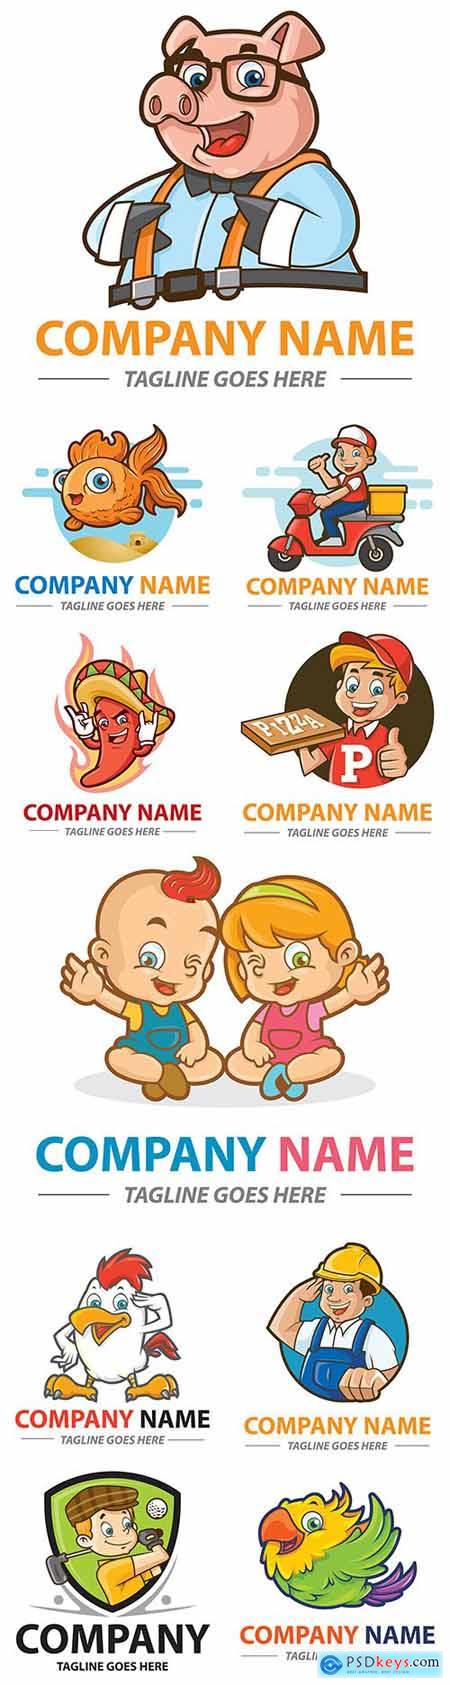 Brand name company logos business corporate design 4